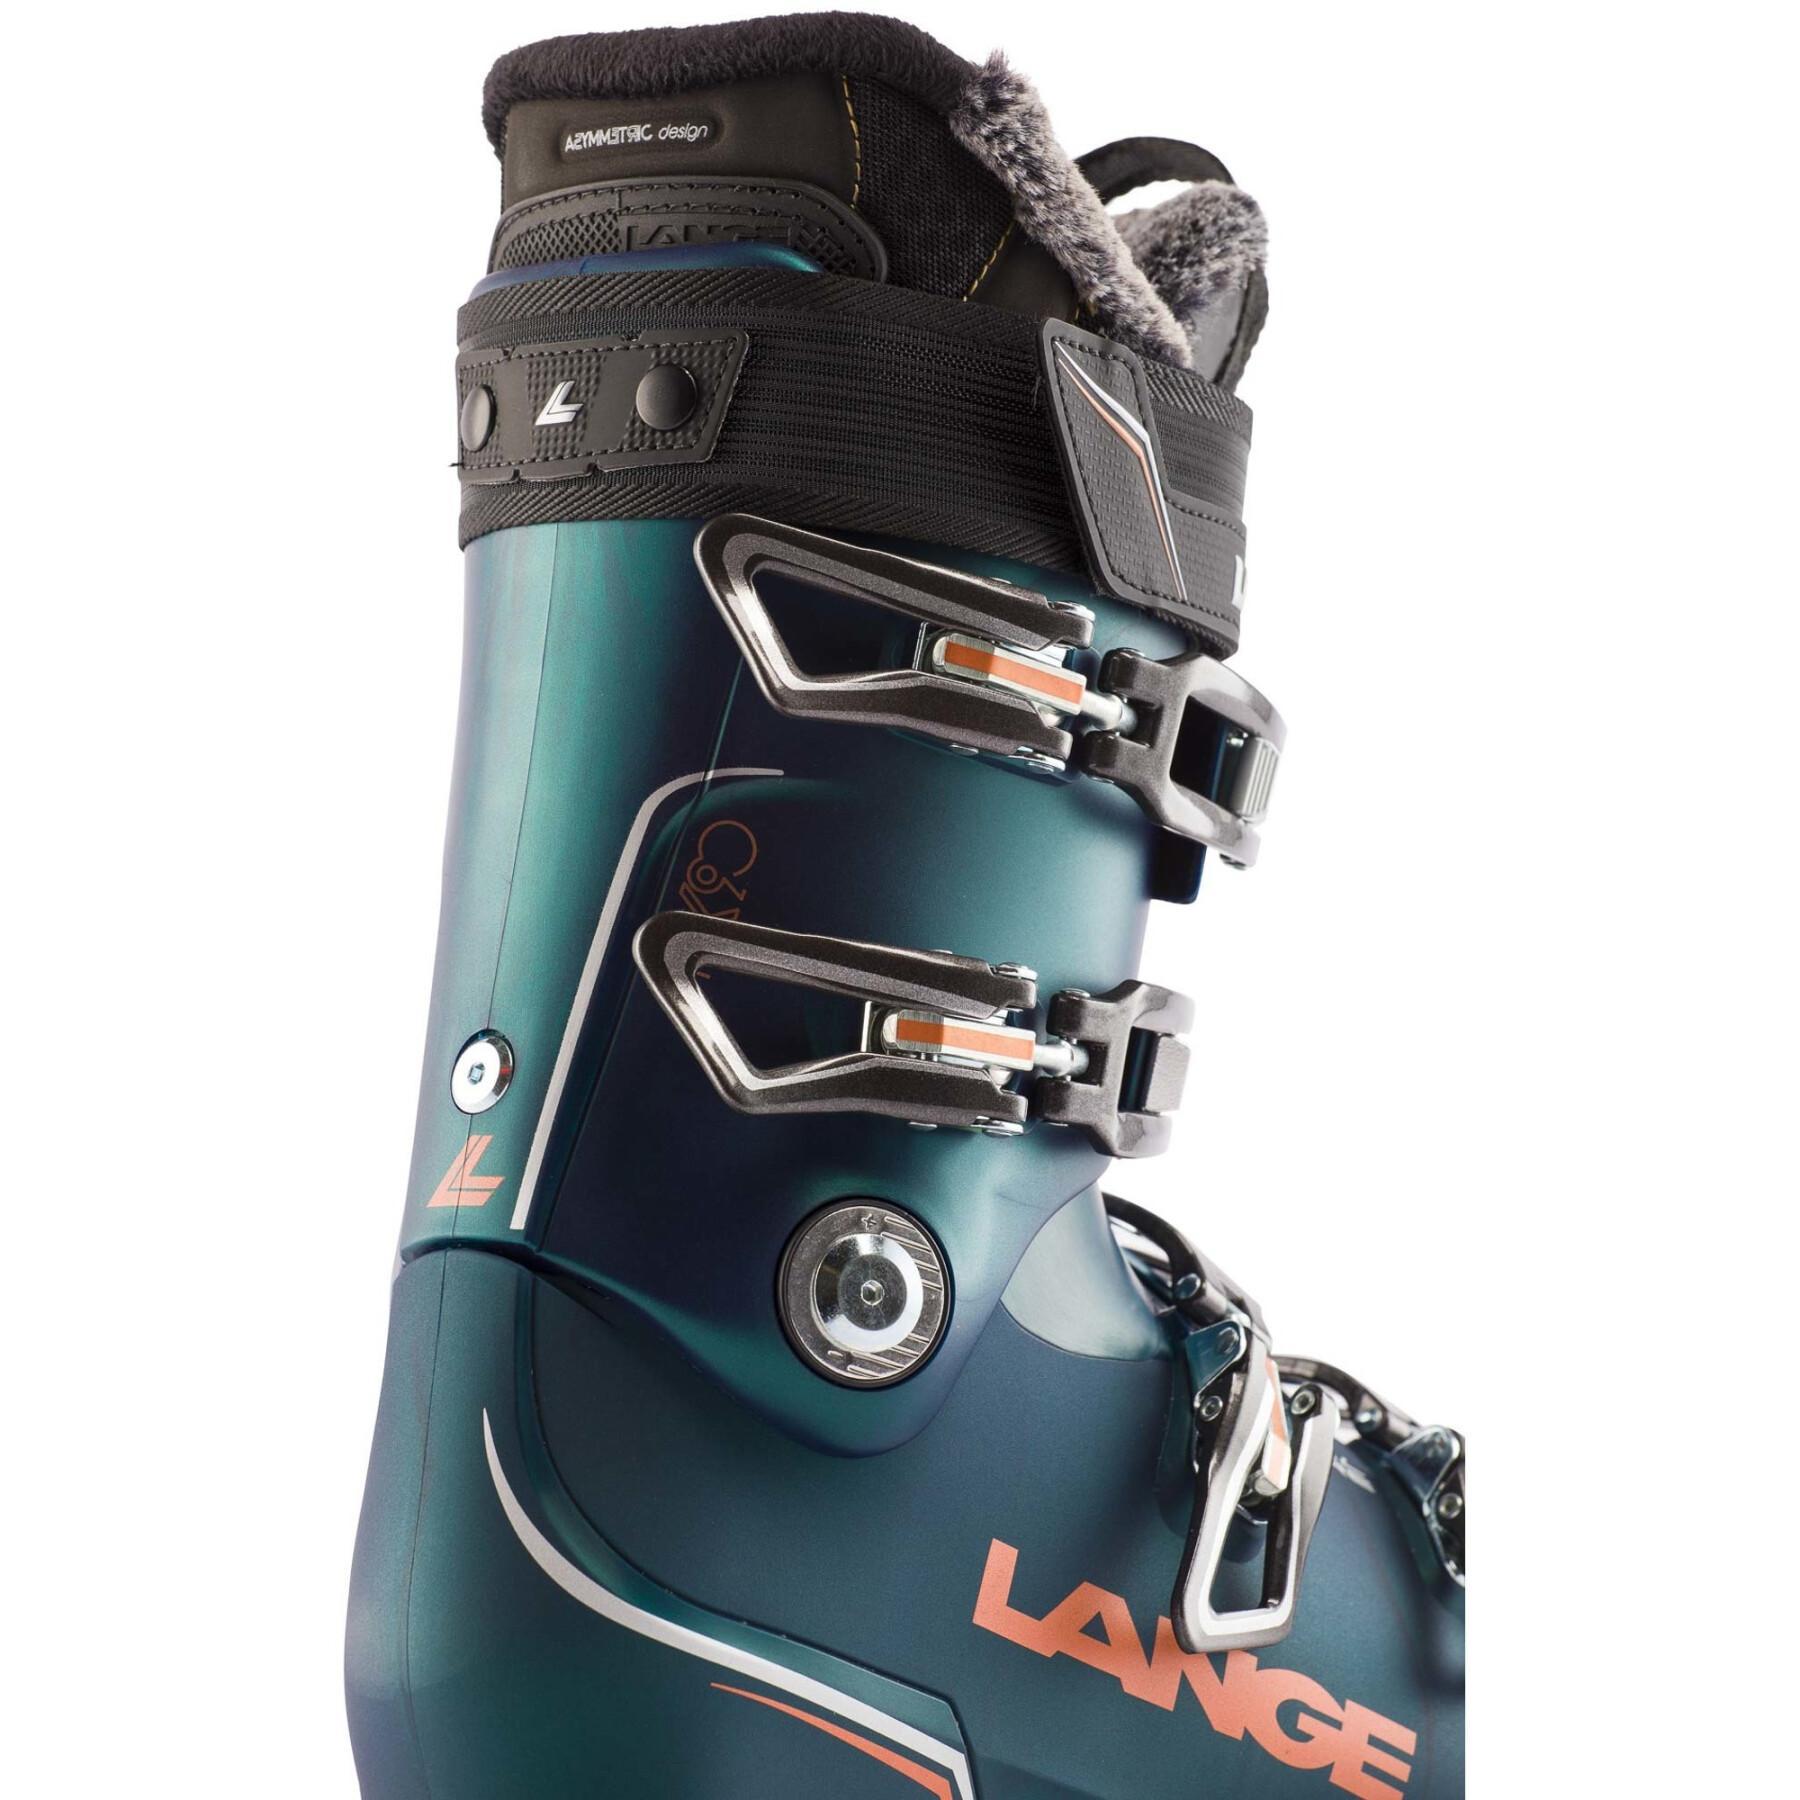 Damskie buty narciarskie Lange Lx 90